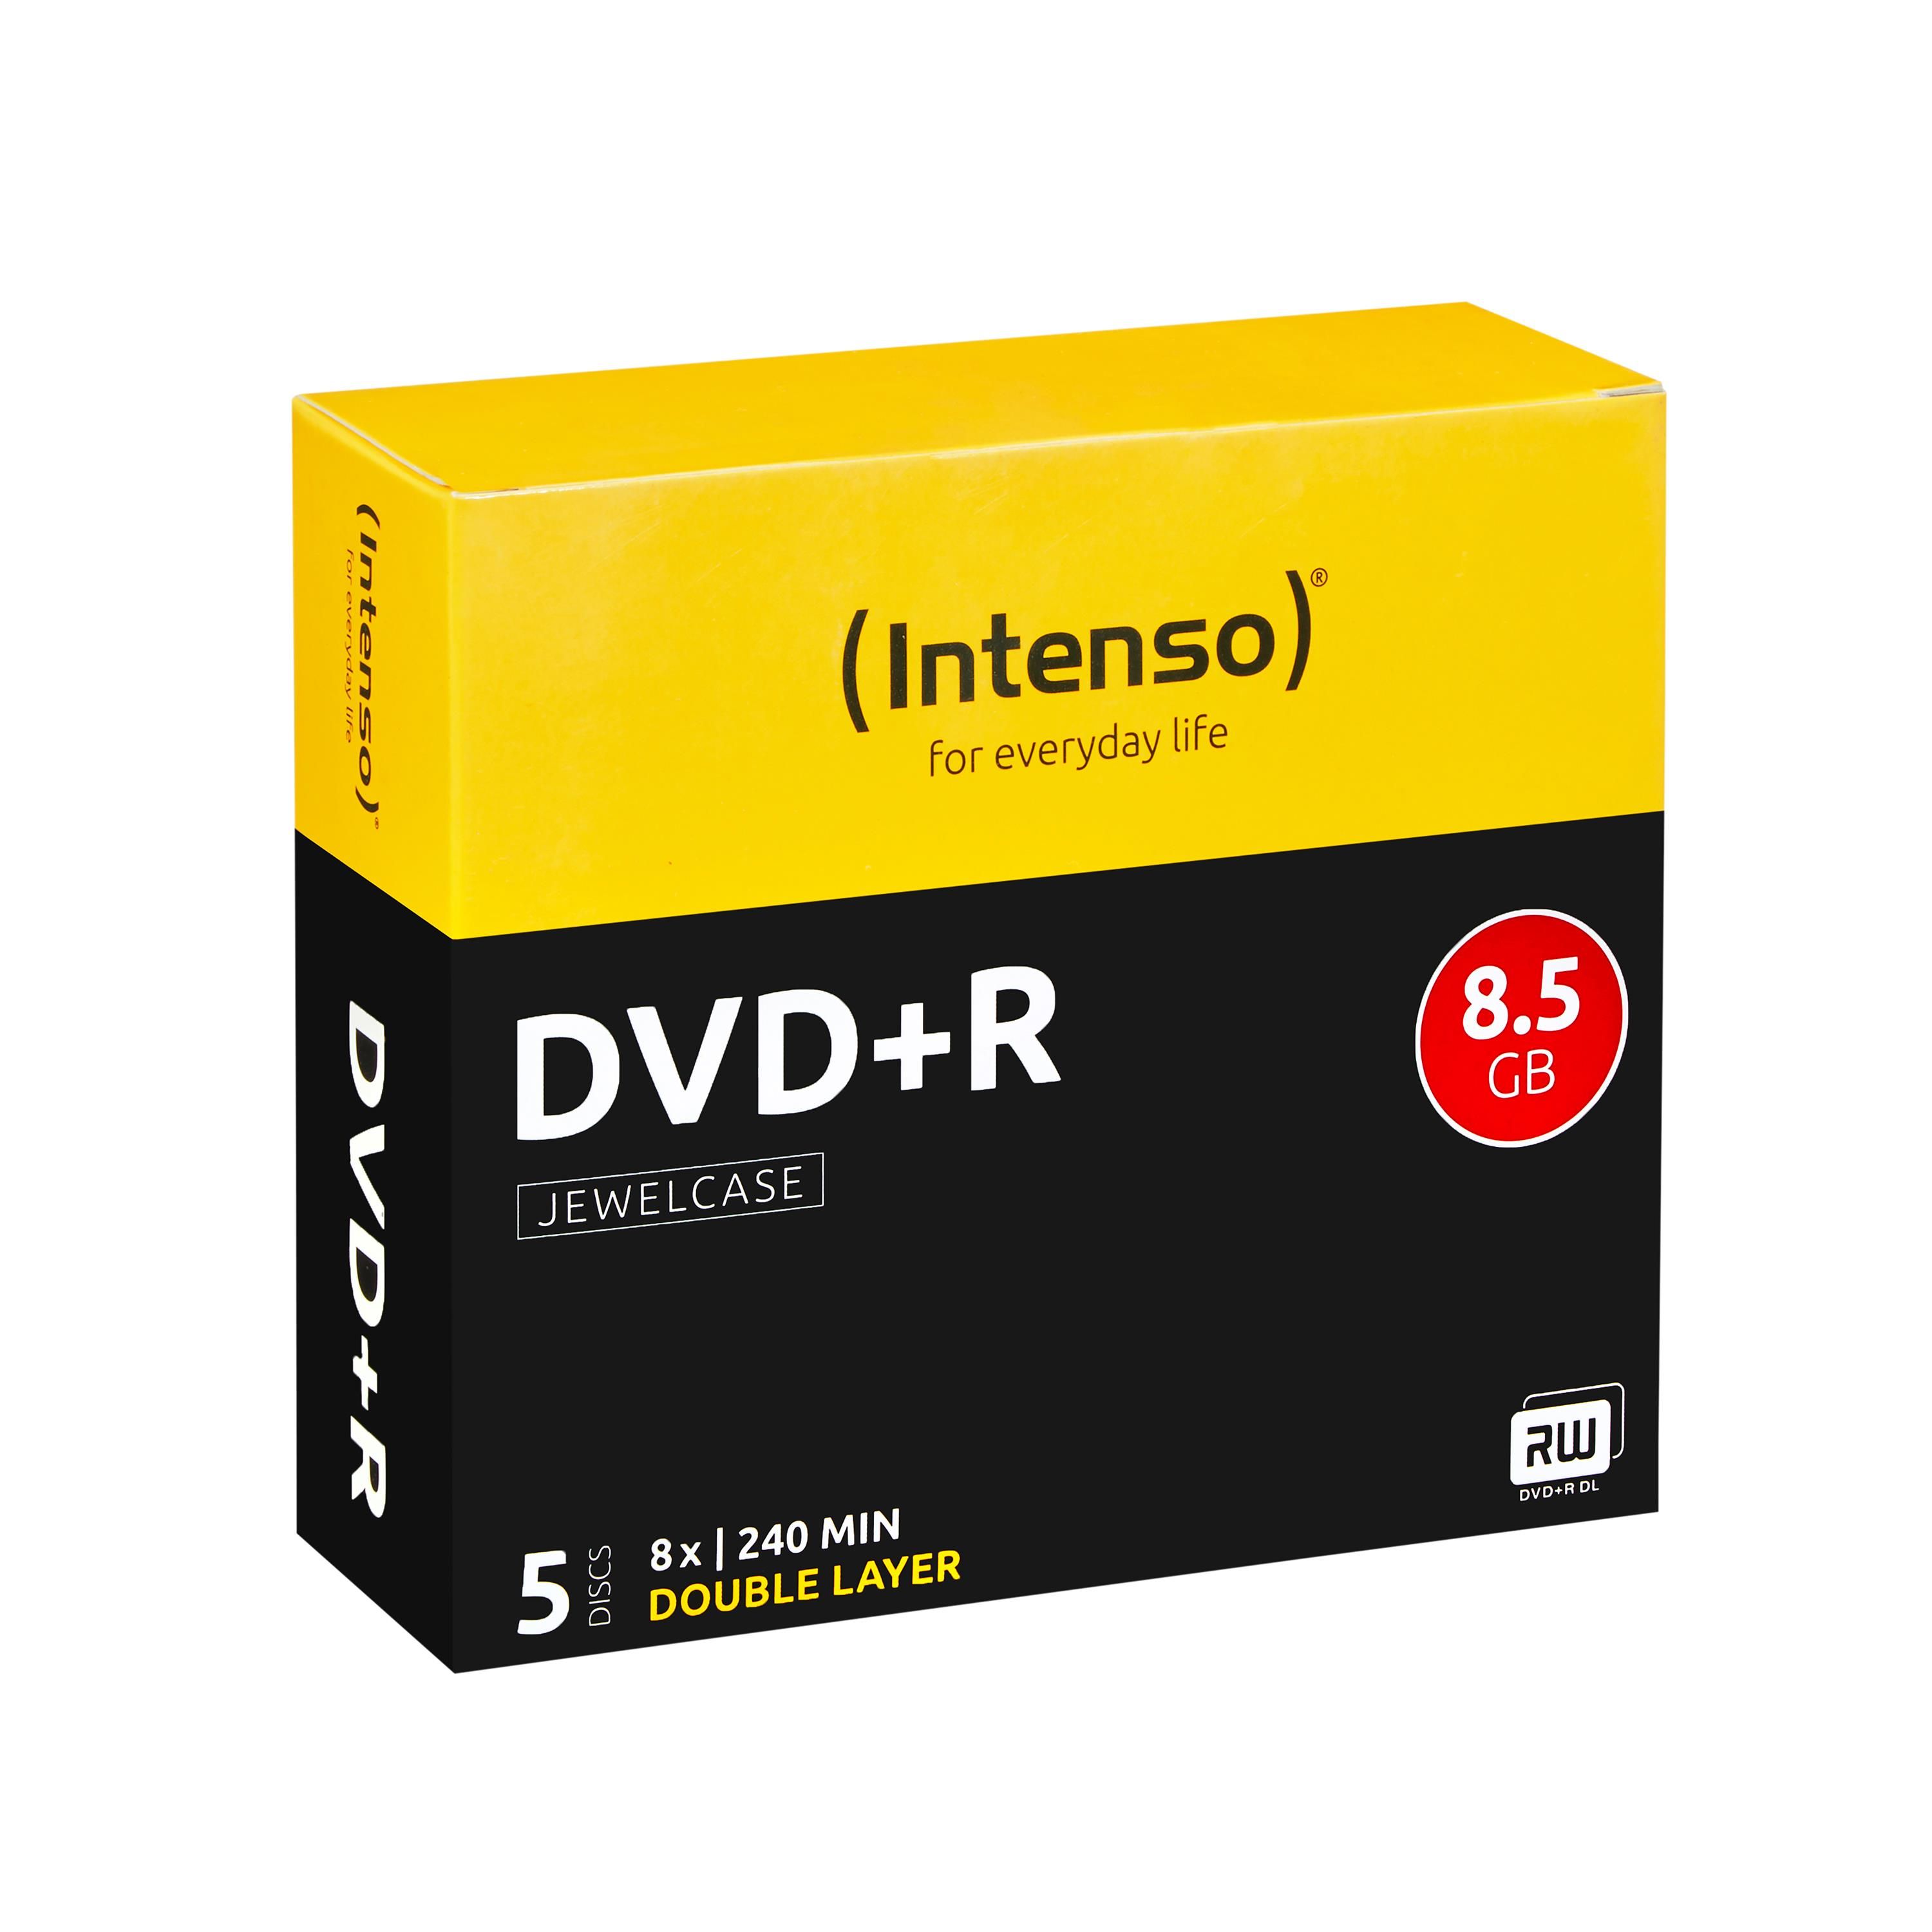 Intenso Dvd+r 8,5gb 5pcs